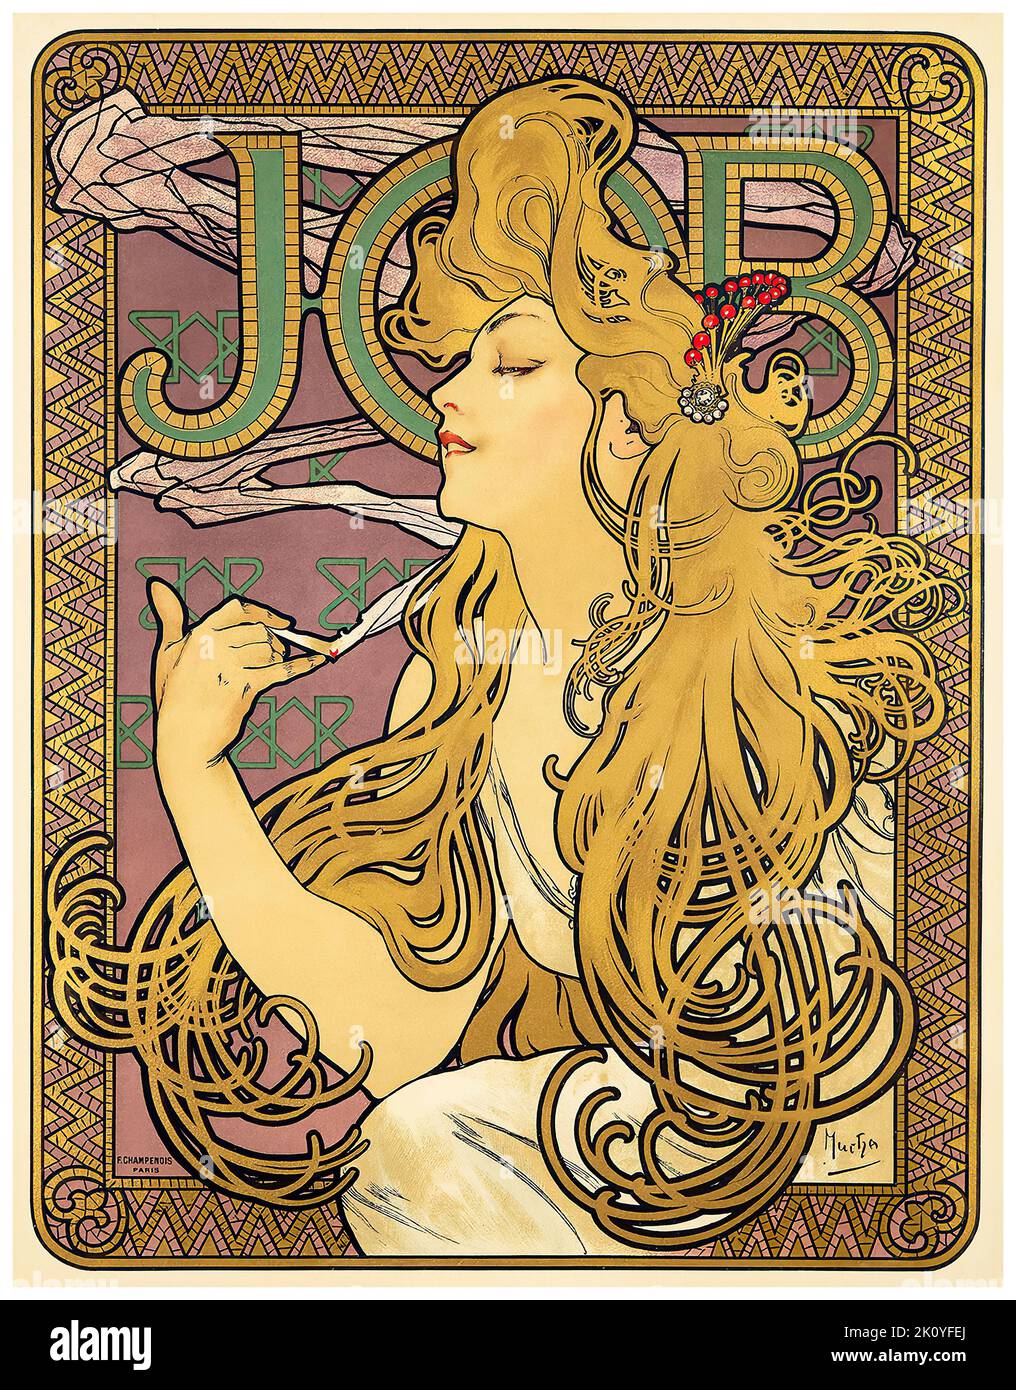 Lavoro, poster vintage di Alphonse Mucha, 1896 Foto Stock